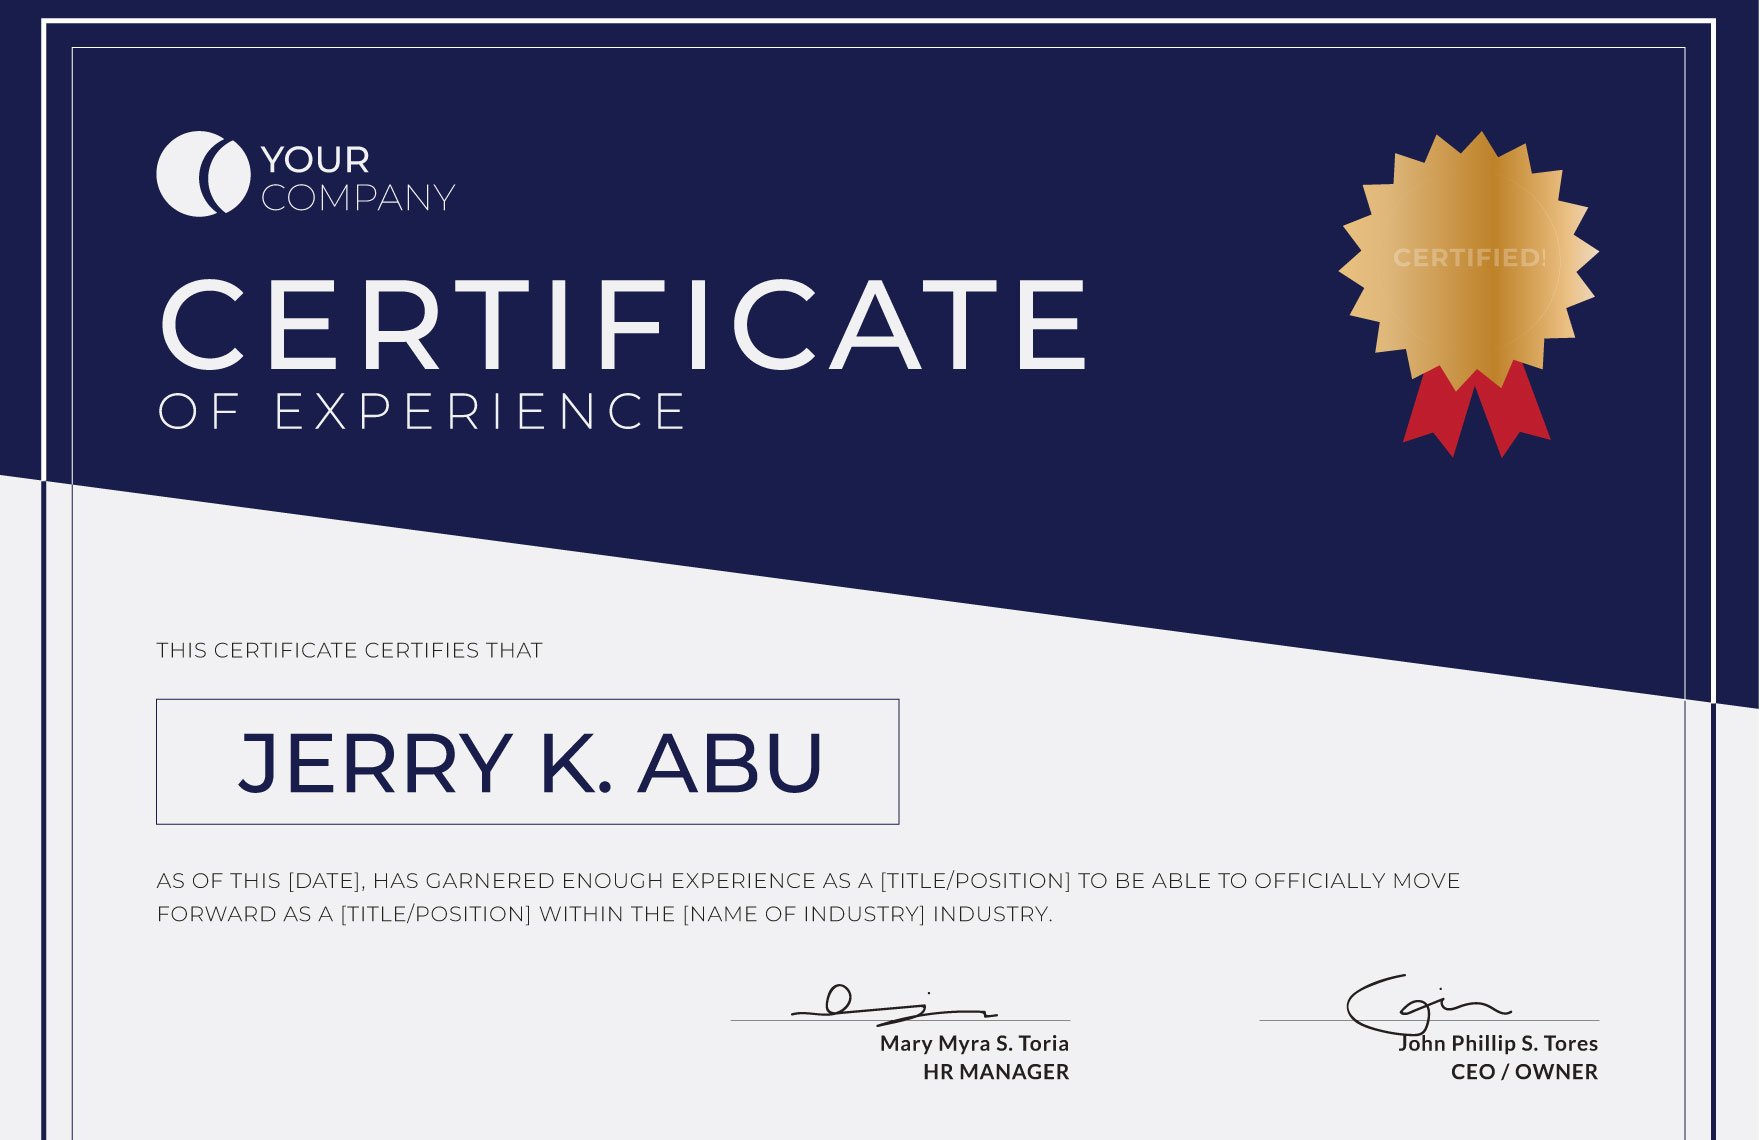 Experience Certificate Template